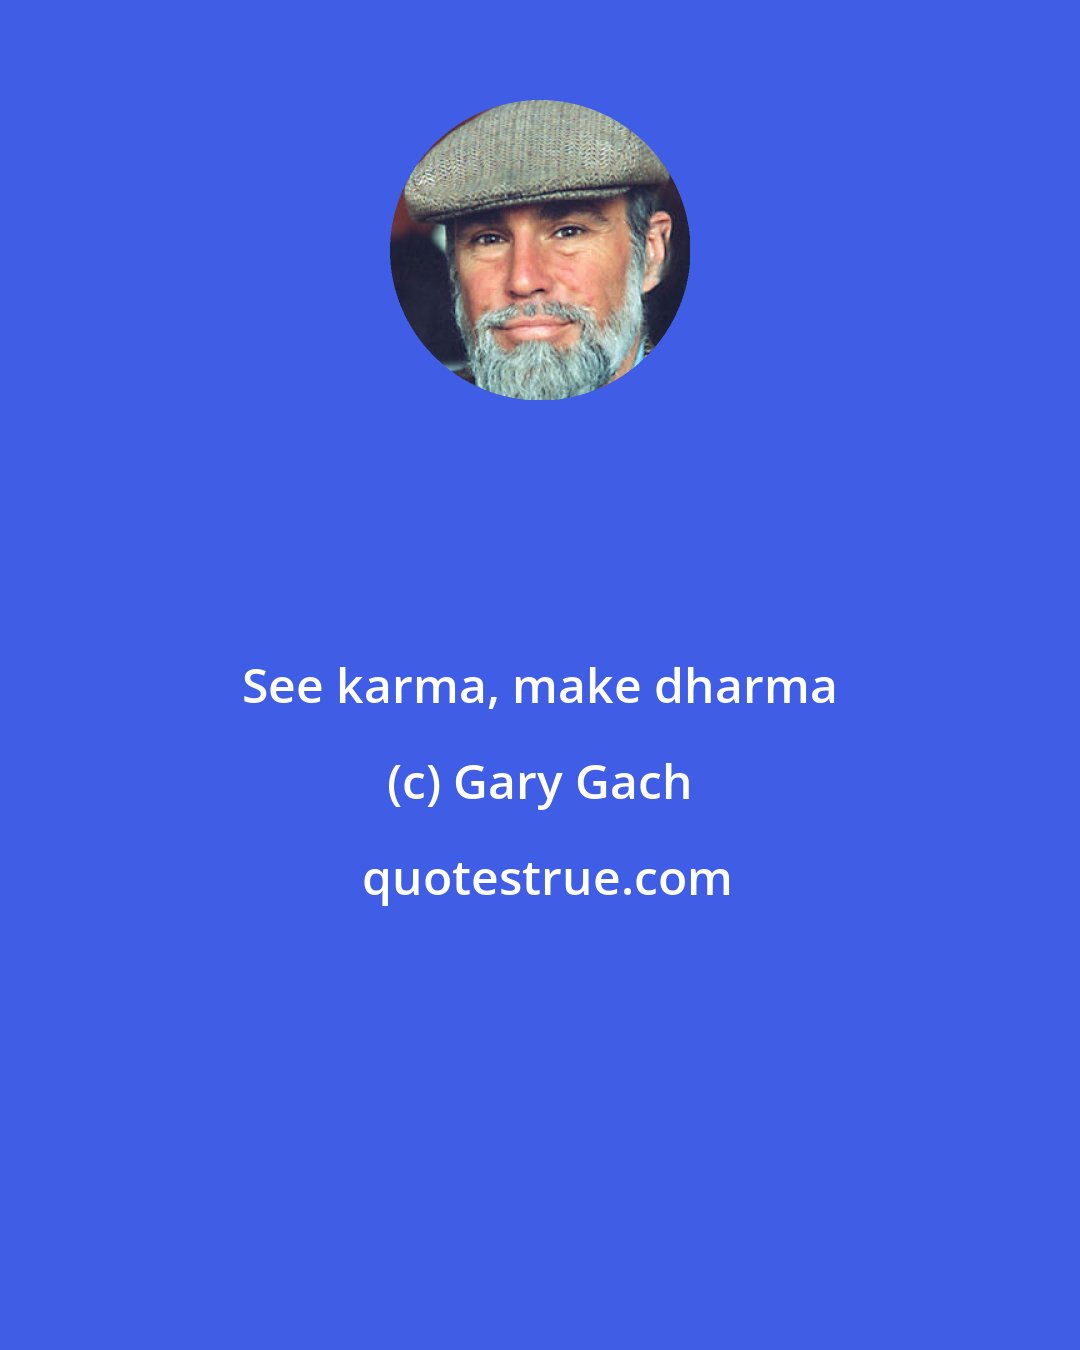 Gary Gach: See karma, make dharma